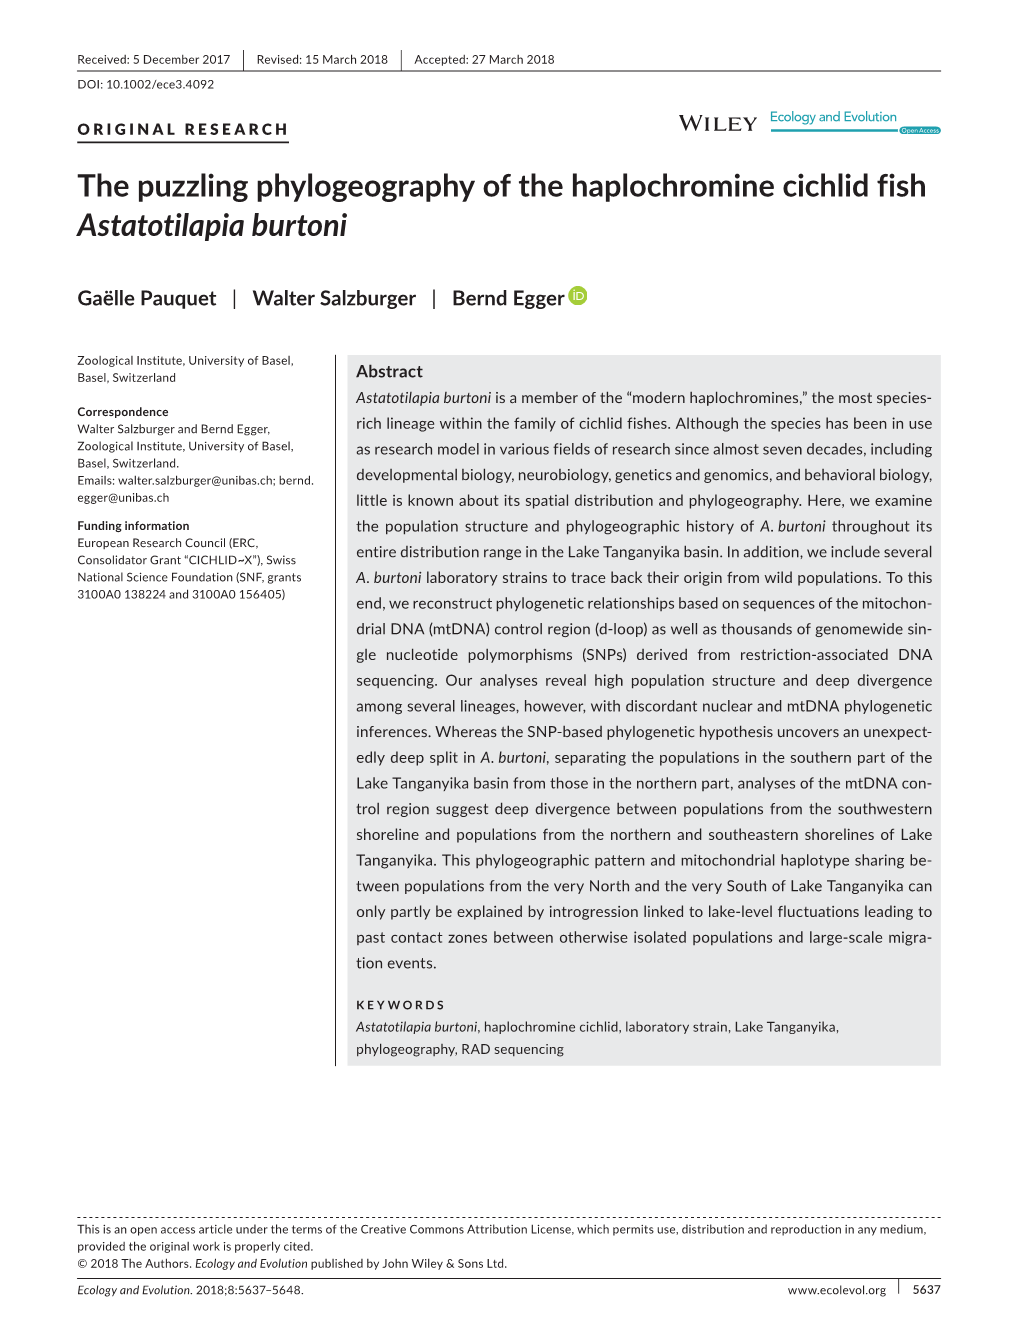 The Puzzling Phylogeography of the Haplochromine Cichlid Fish Astatotilapia Burtoni